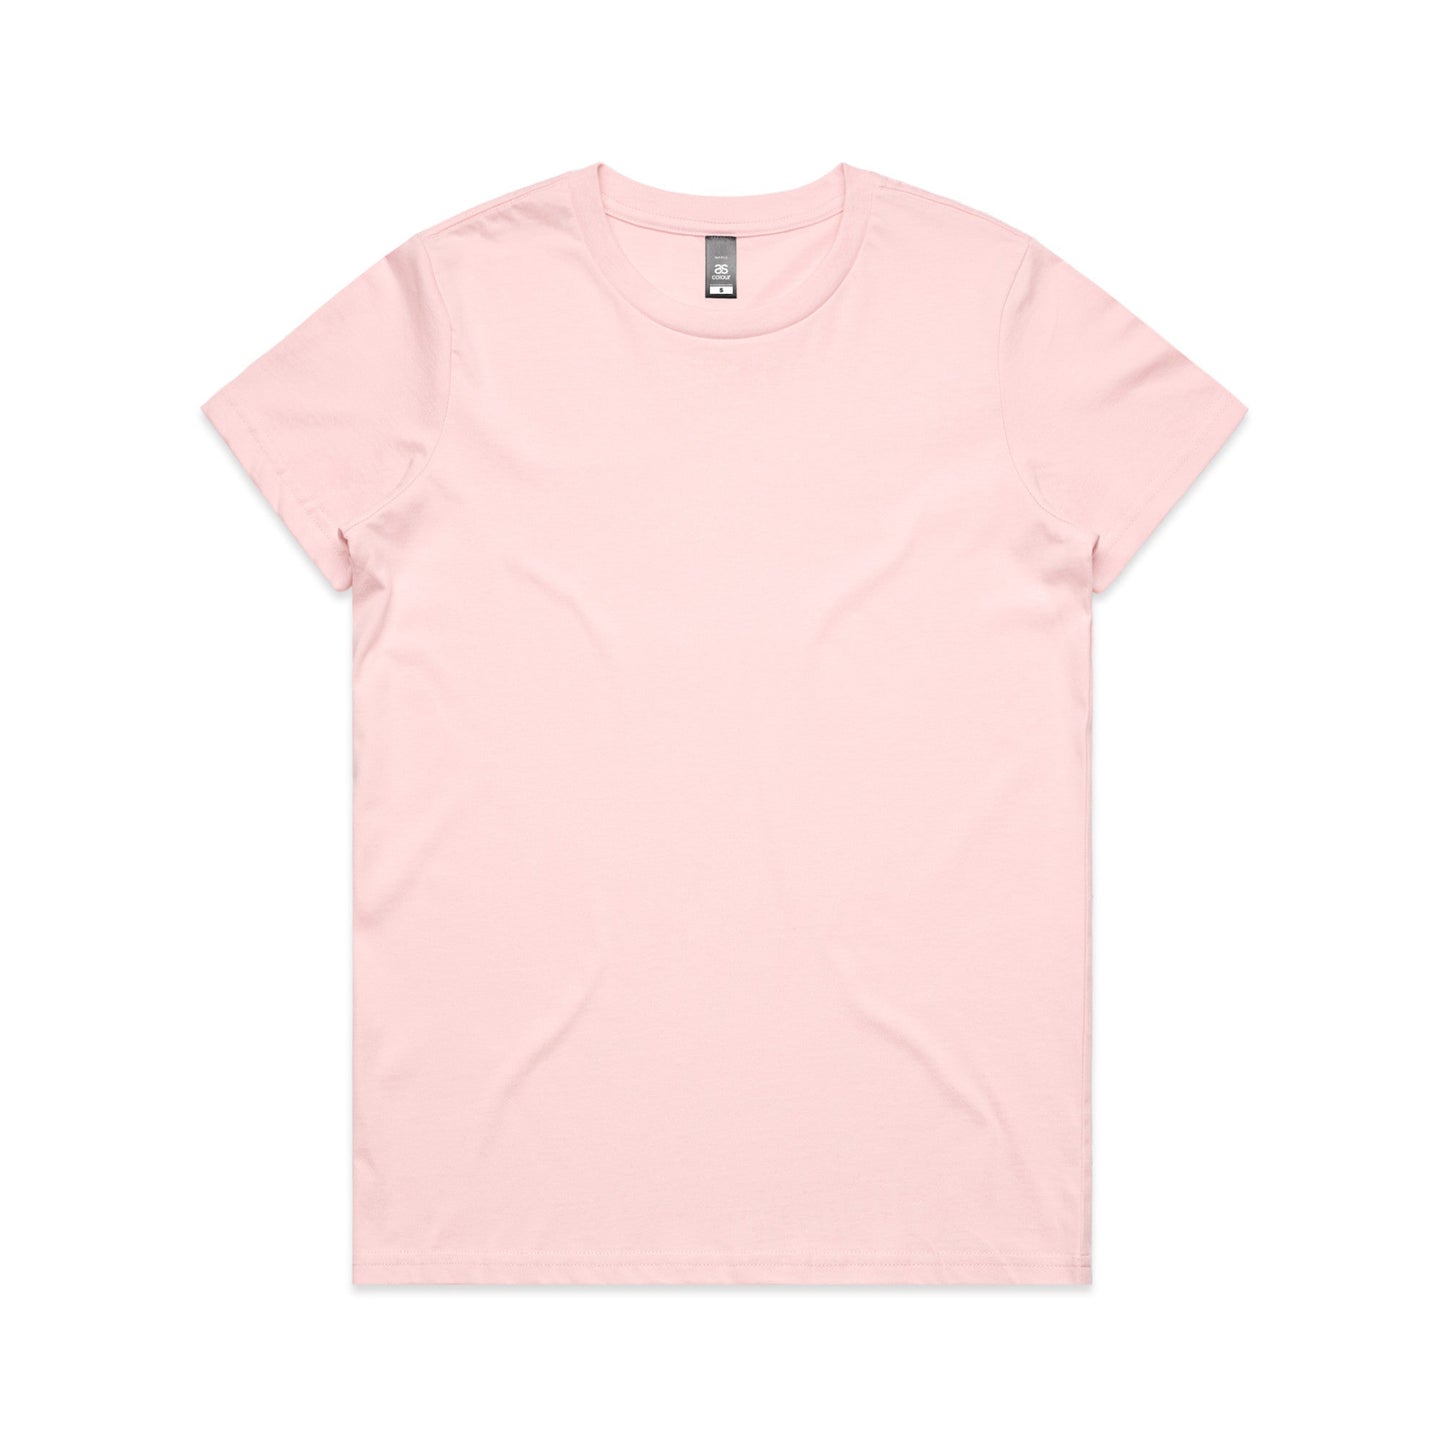 "Shop Like Rachel" Relaxed Maple T-Shirt